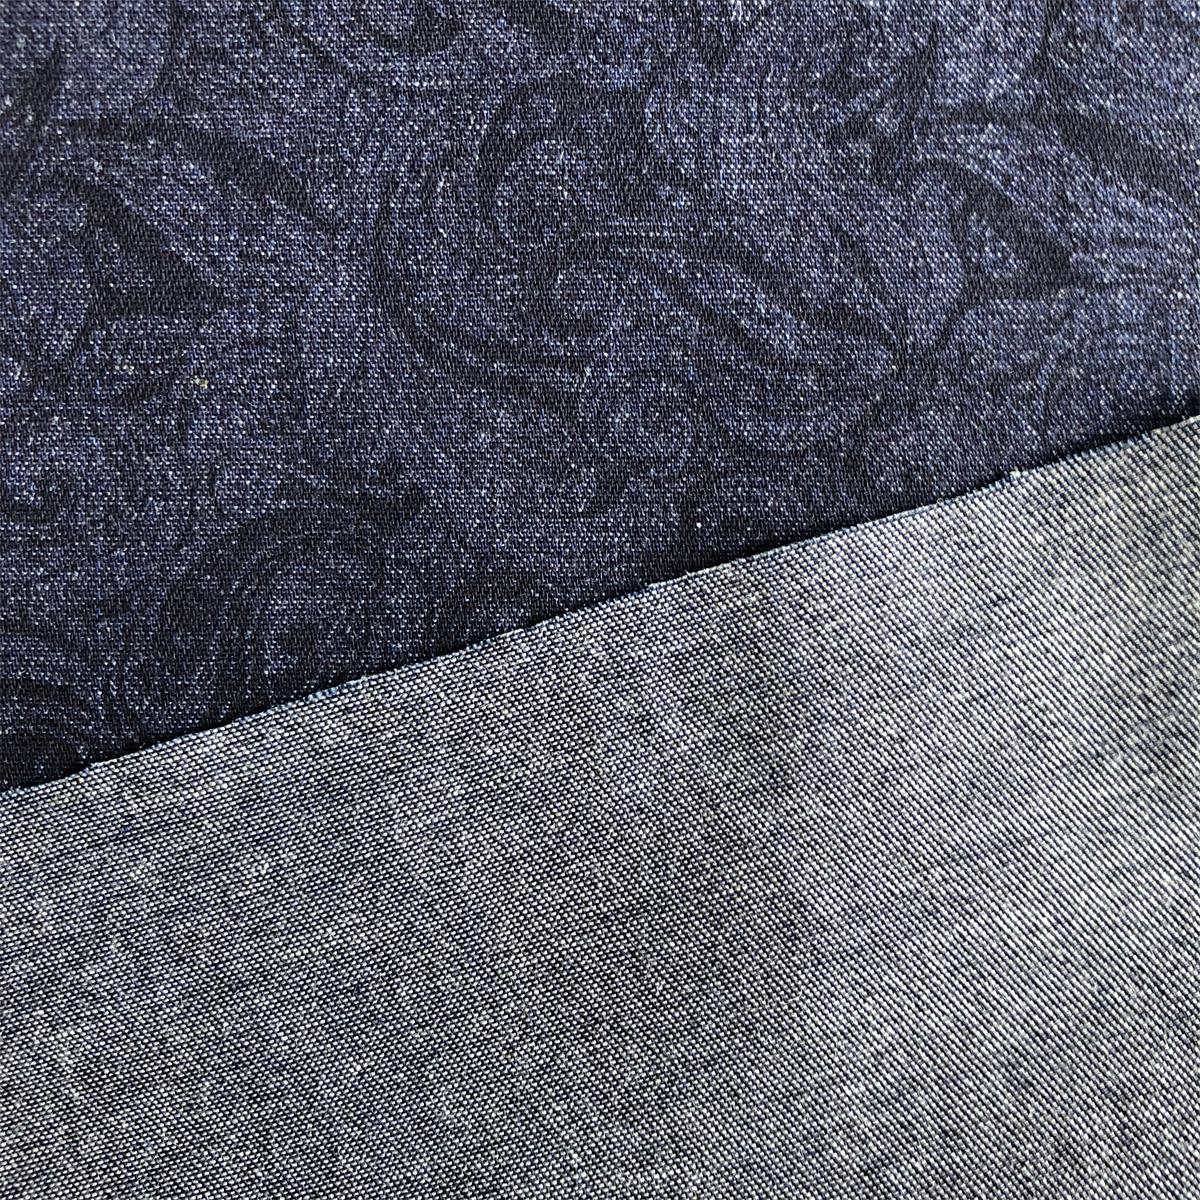 Denim Fabric by indigo yarn woven for men's casual shirts 100% cotton twill denim printed shirts woven fabric